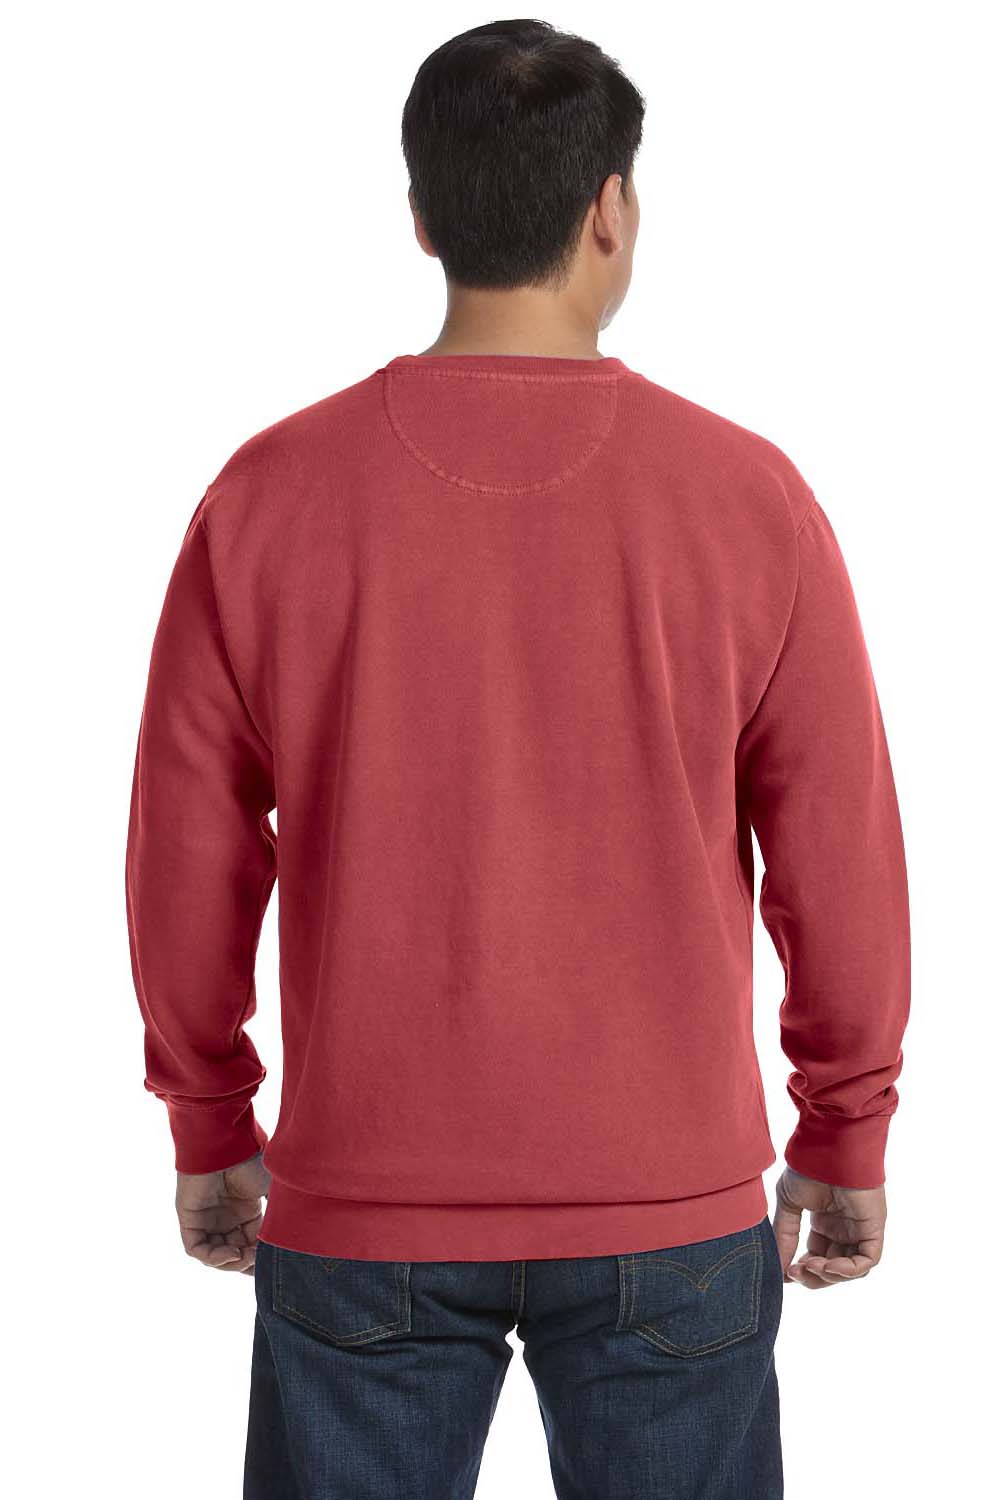 Comfort Colors 1566 Mens Crewneck Sweatshirt Crimson Red Back